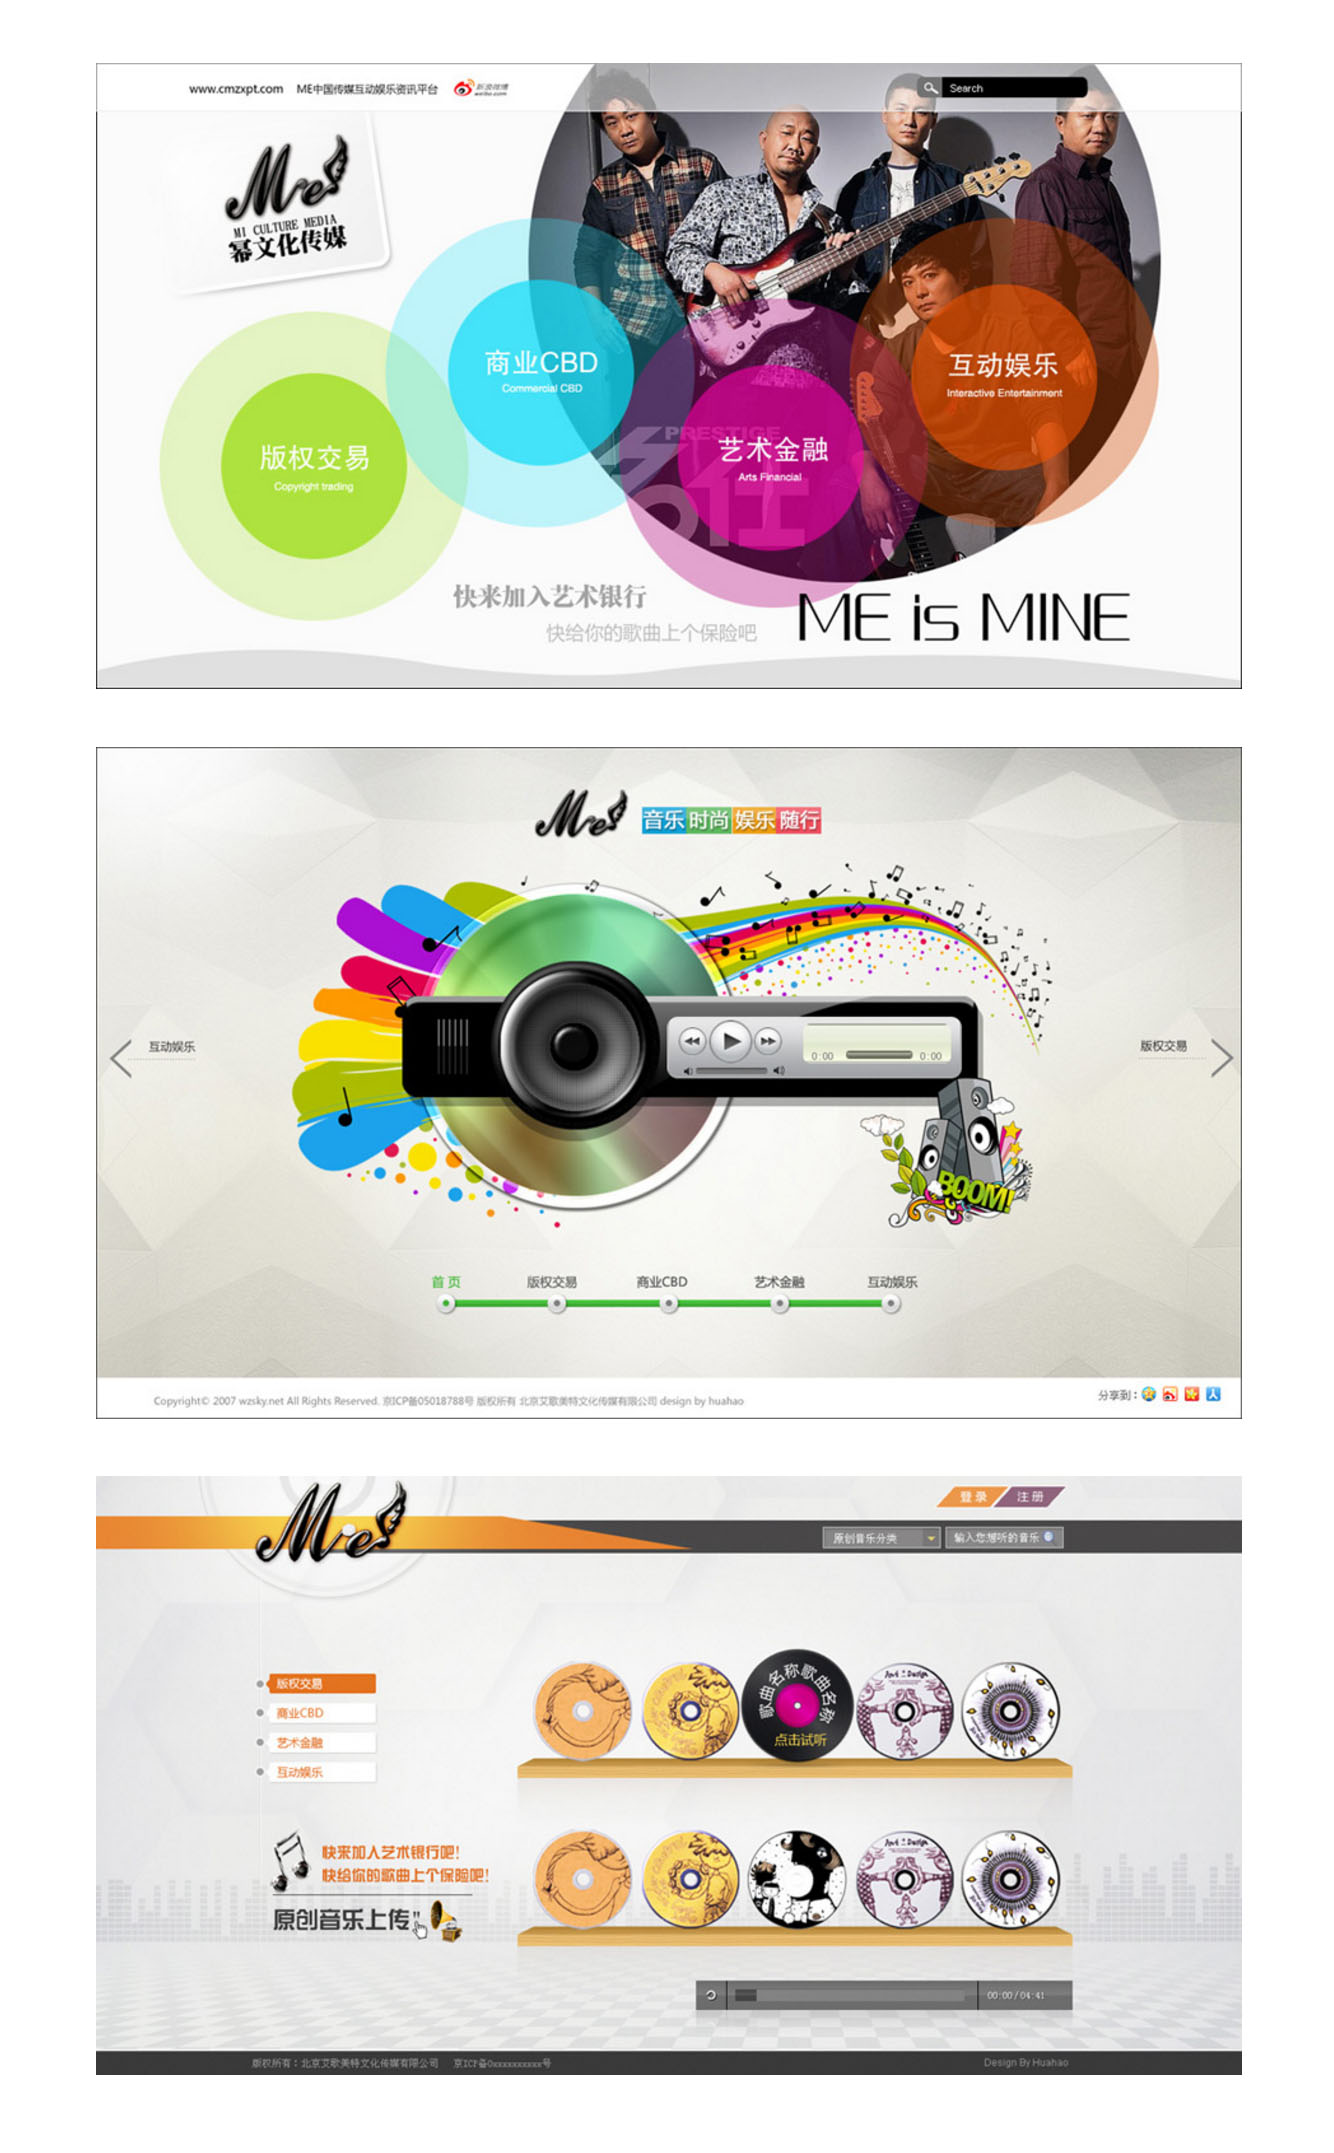 ME中国传媒互动娱乐资讯平台3.jpg